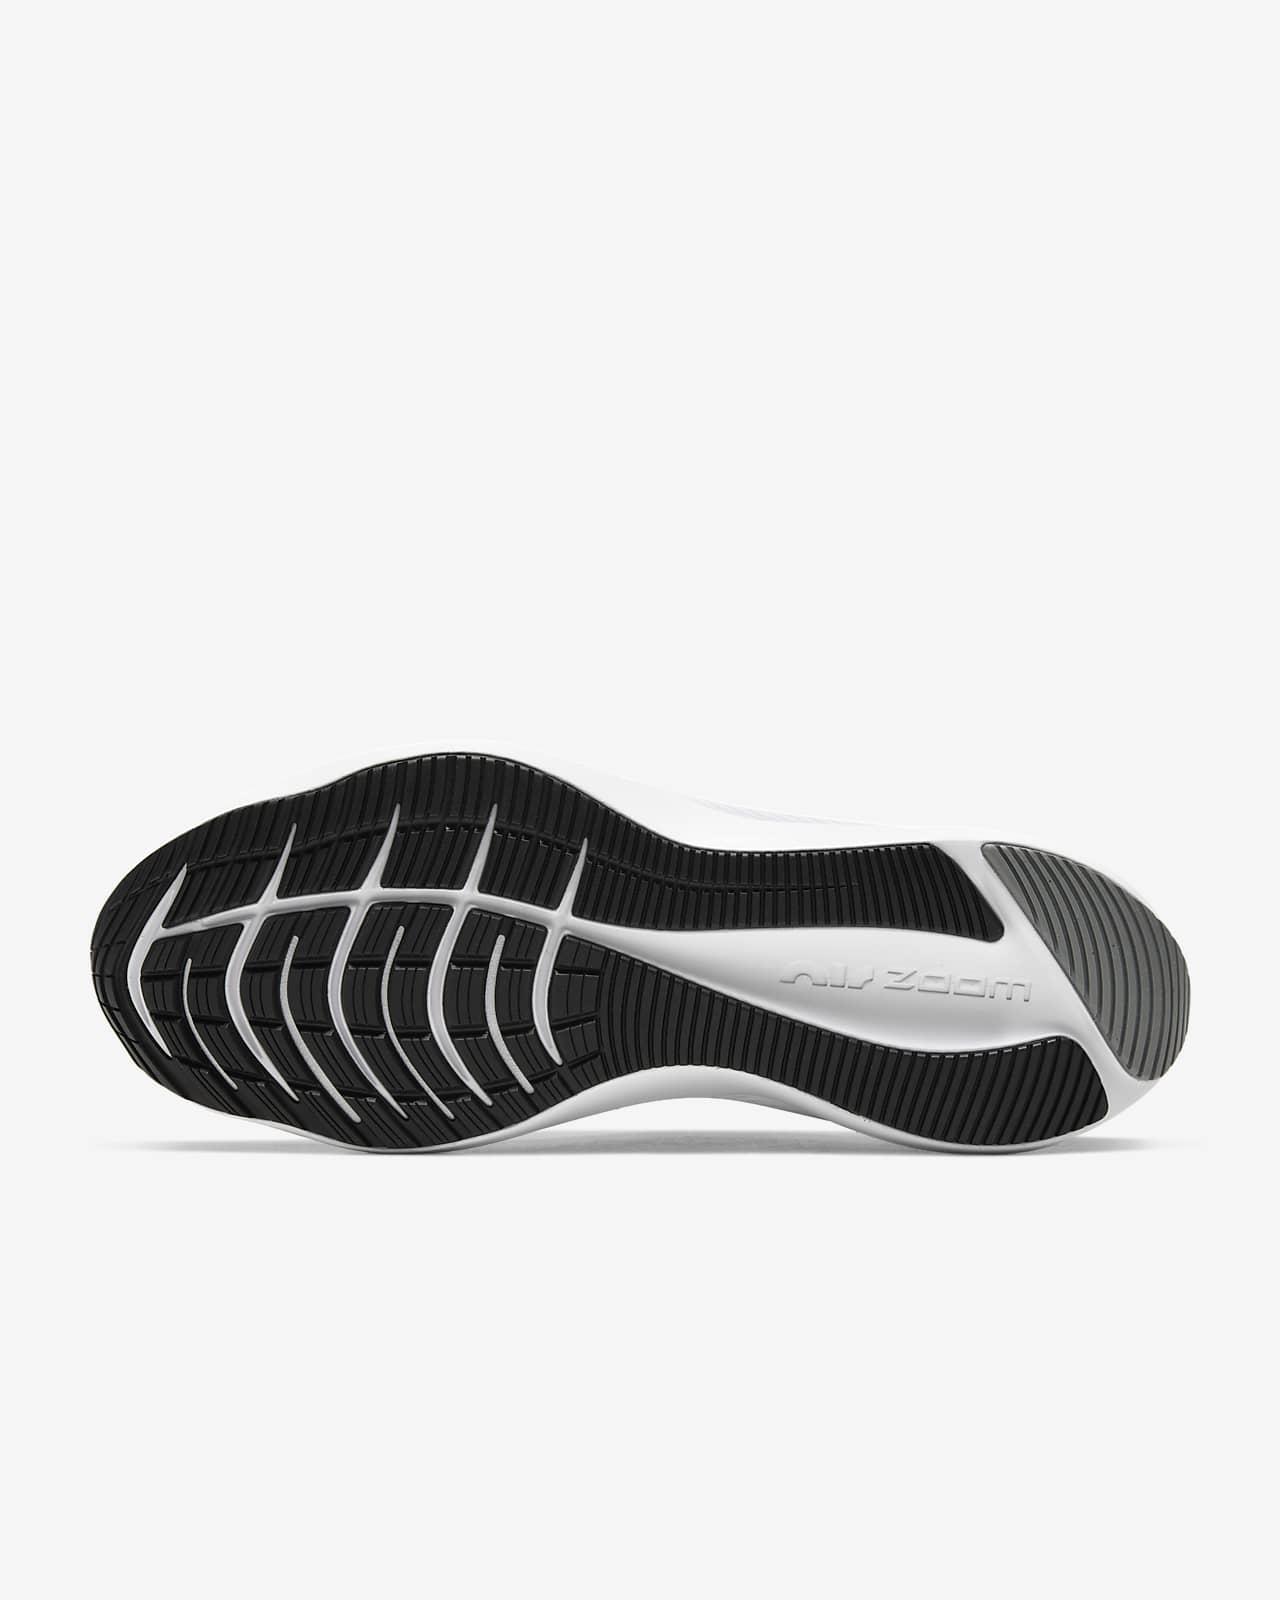 Calzado de running de carretera para hombre Nike Air Zoom Winflo 7 ليمون وماء